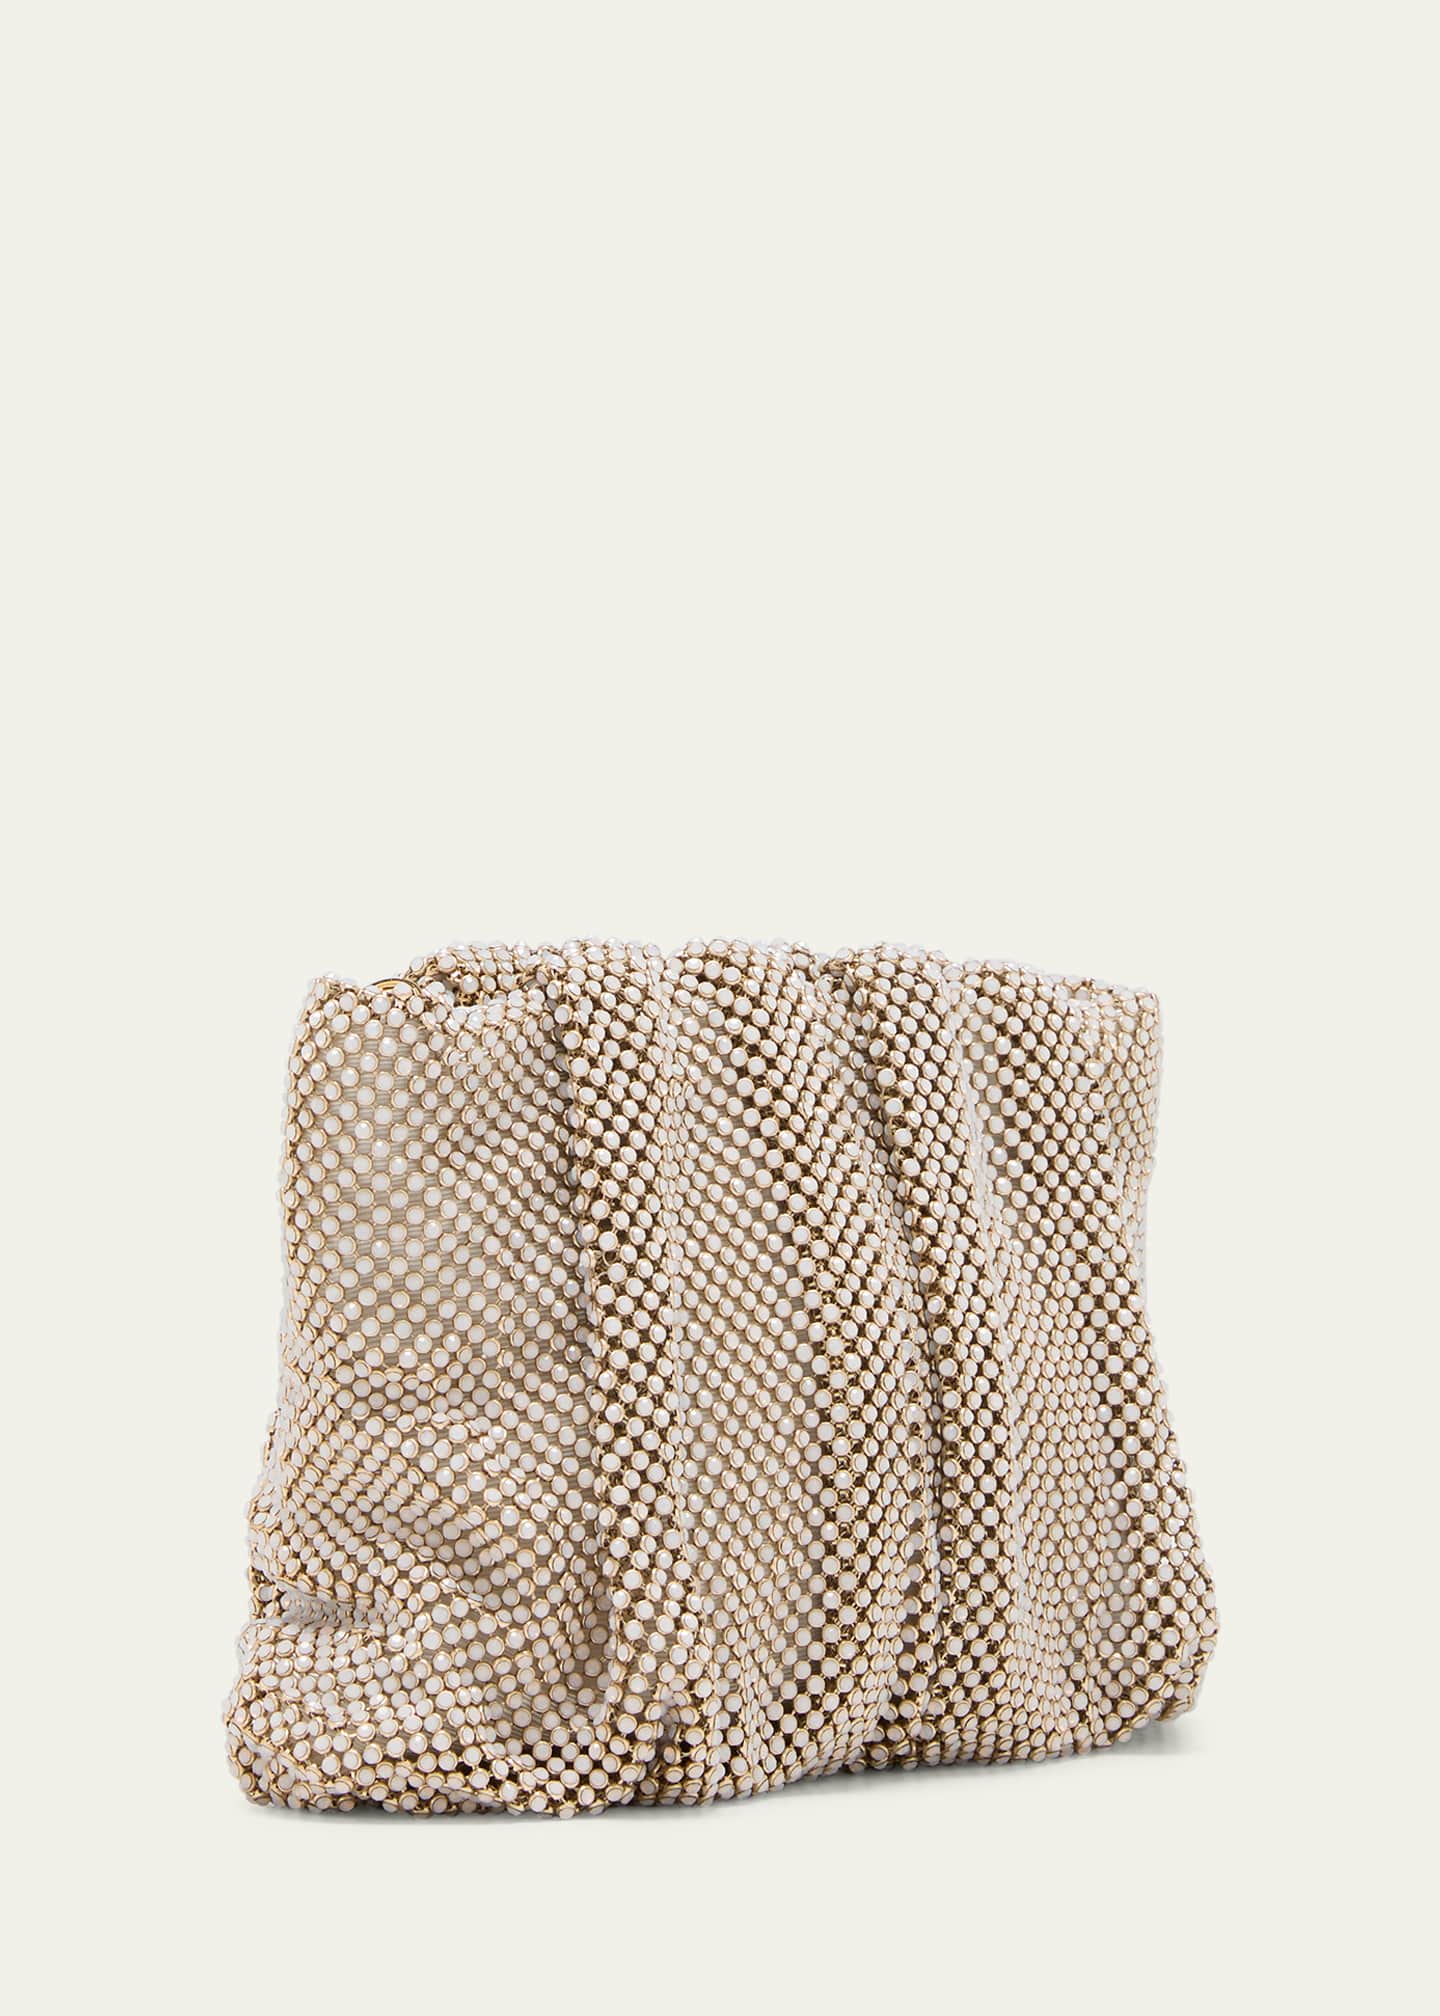 Loeffler Randall Ember Embellished Clutch Bag - Bergdorf Goodman